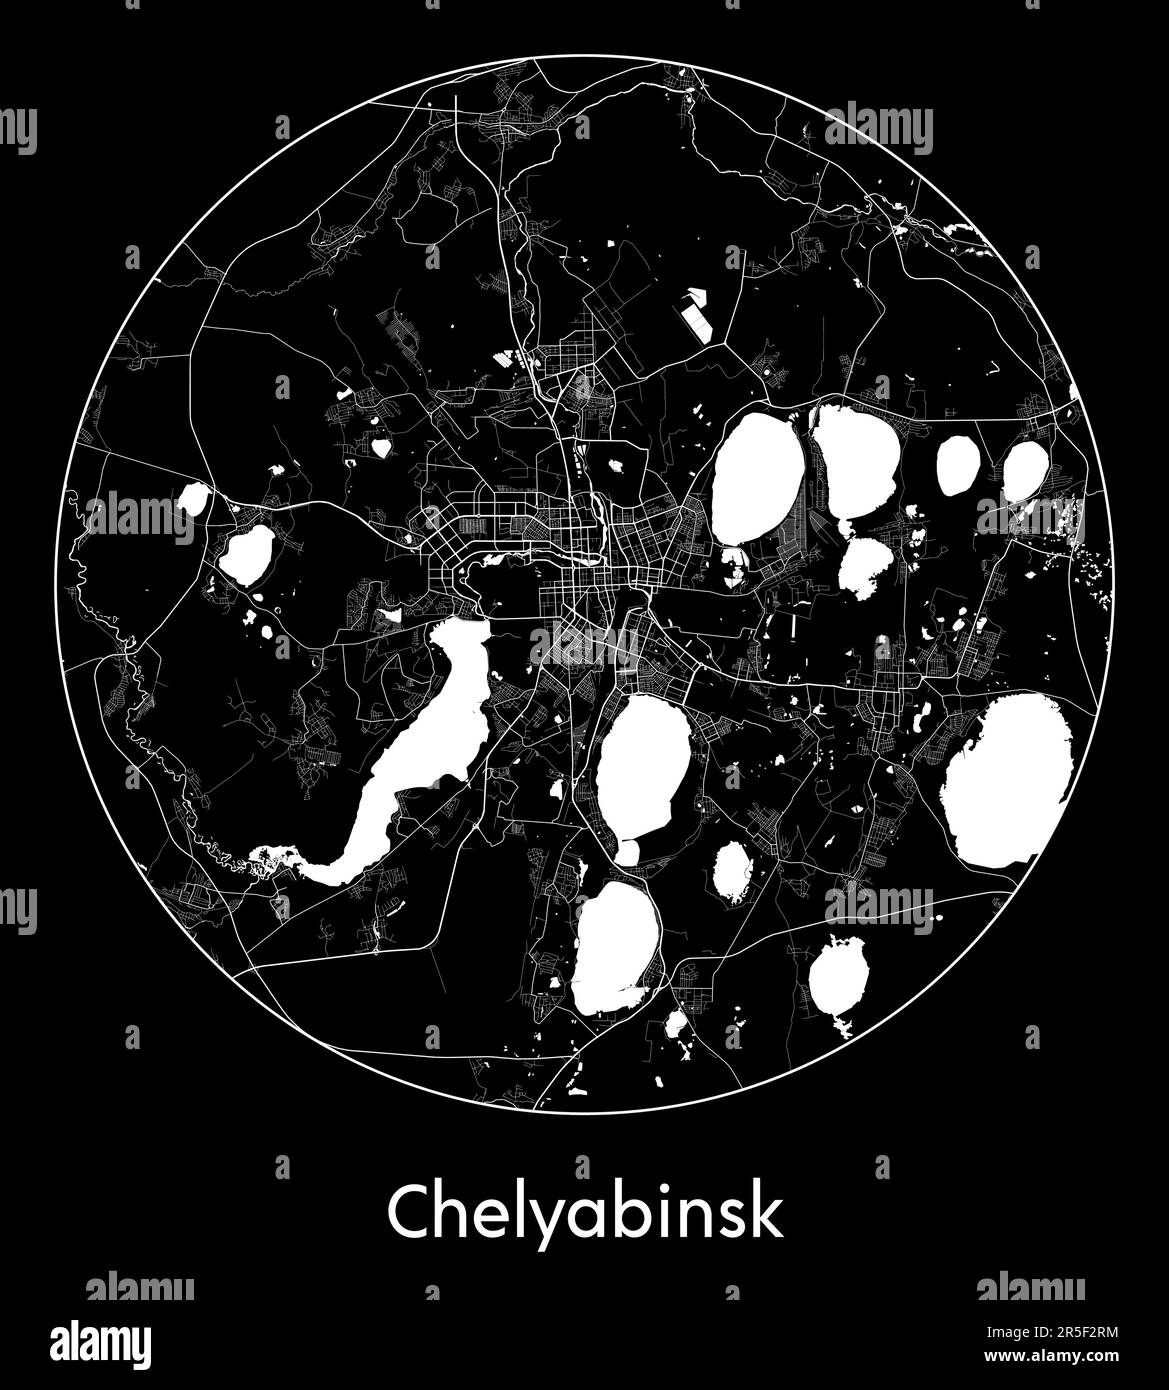 City Map Chelyabinsk Russia Asia vector illustration Stock Vector